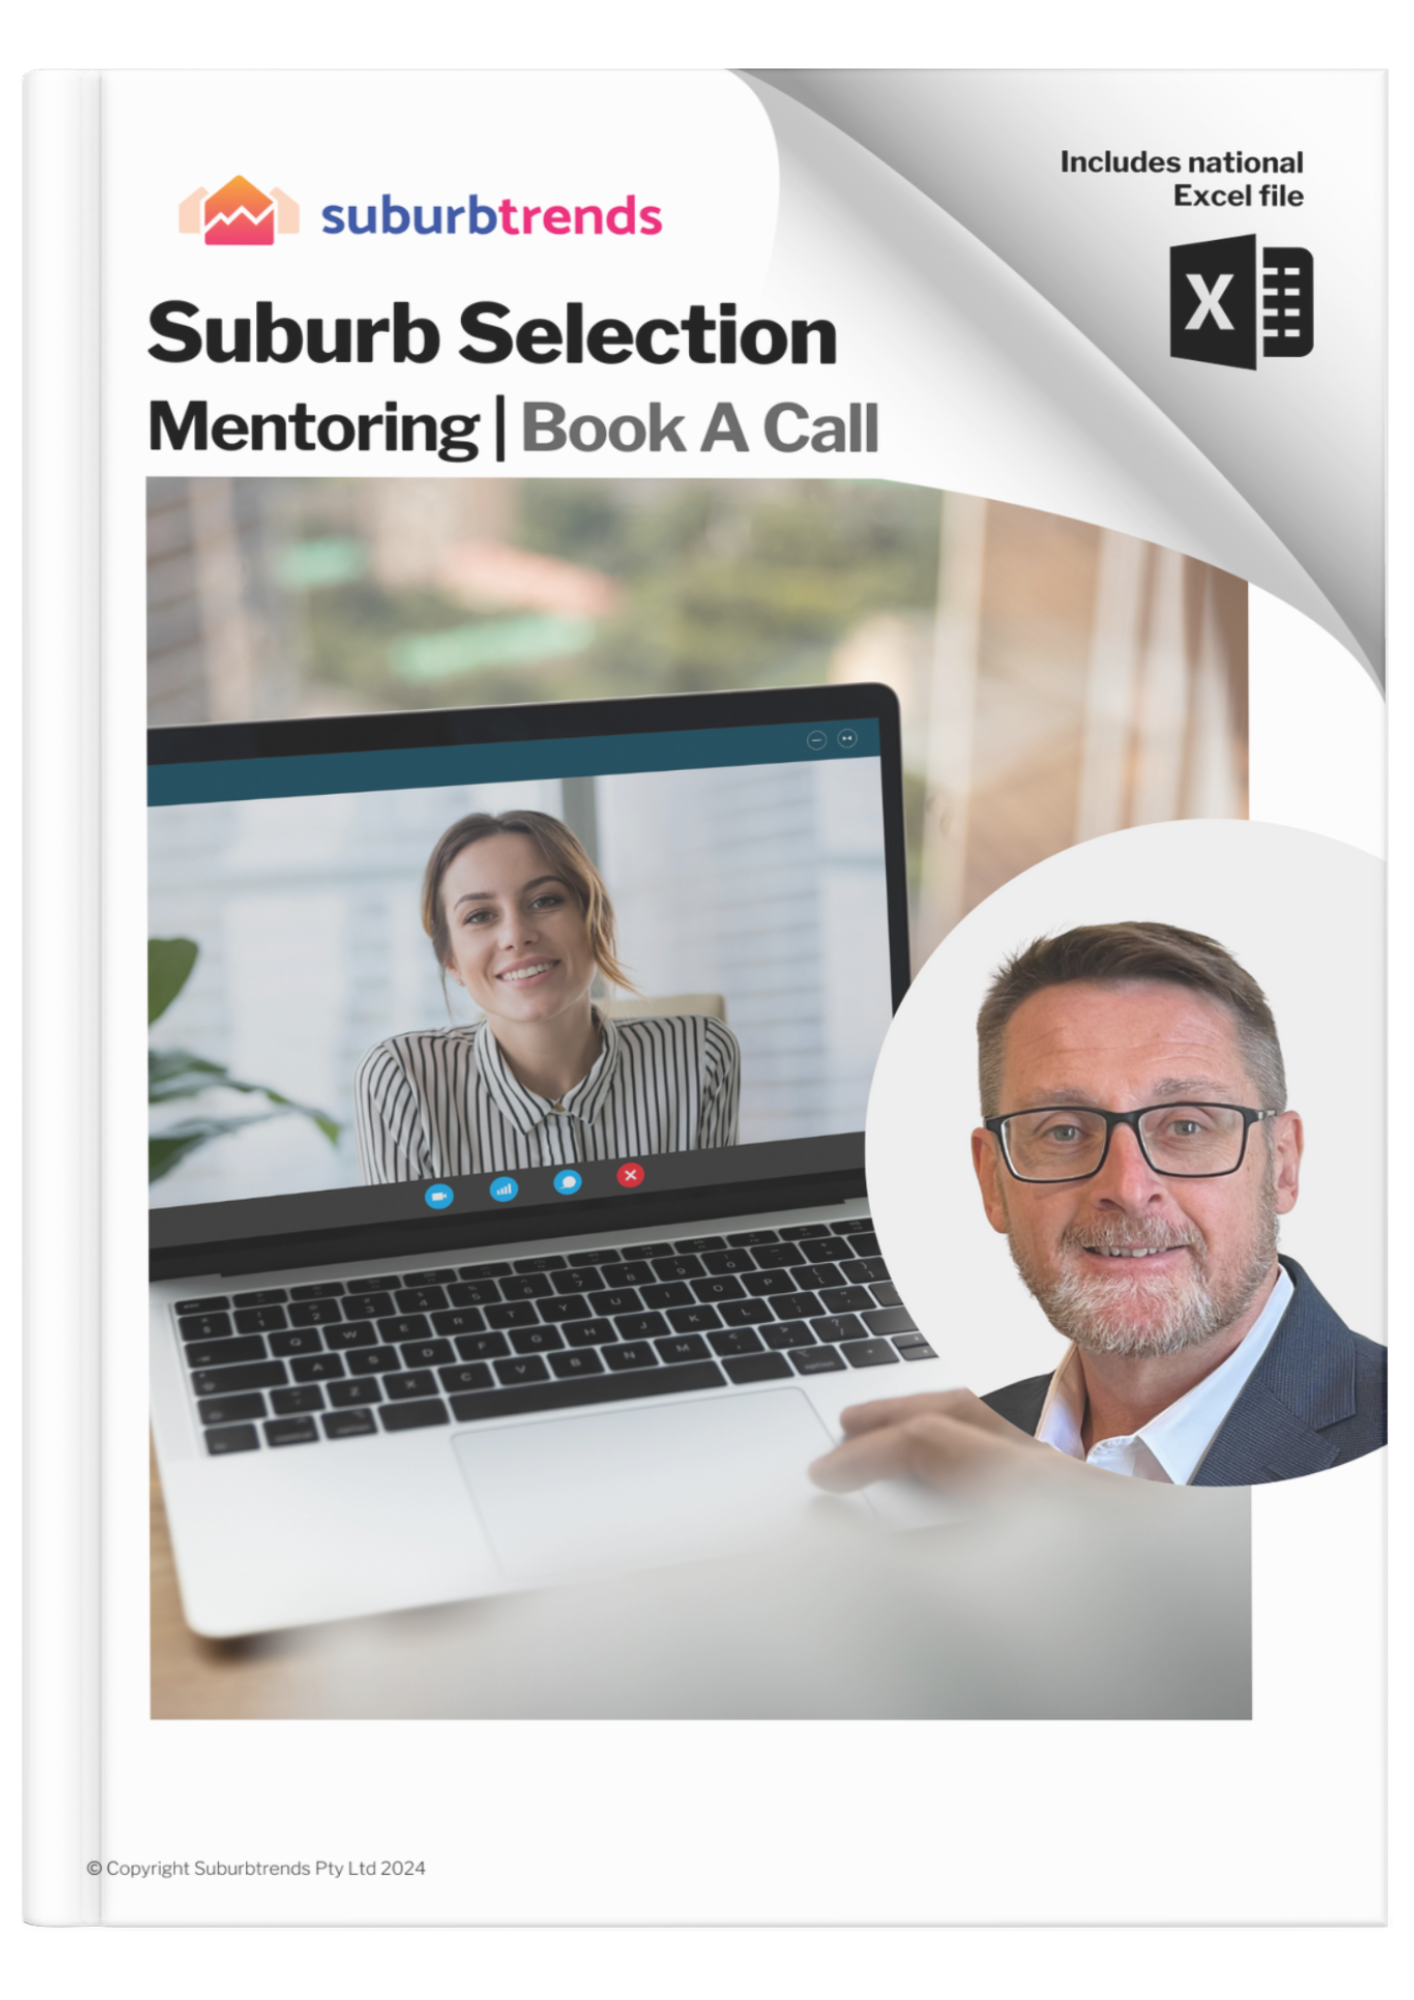 Suburb Selection with Kent Lardner